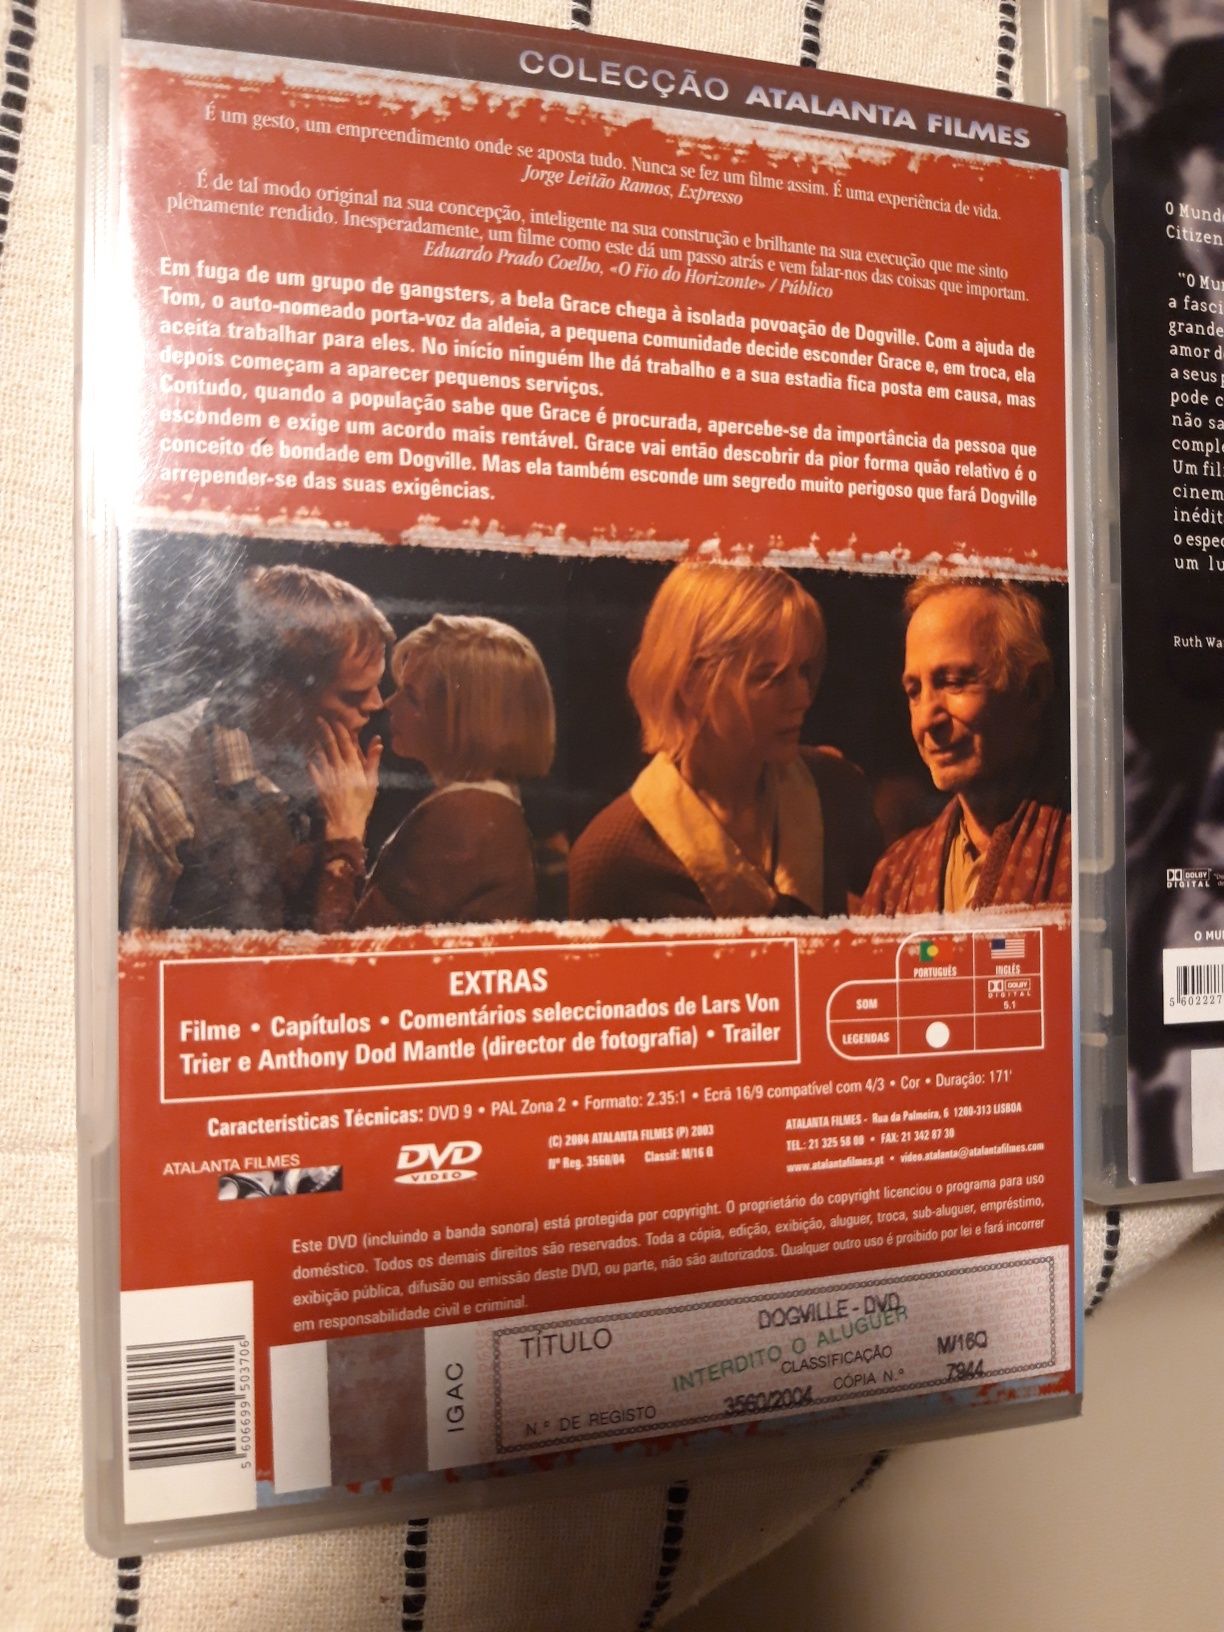 1 DVD: As Confissões de Schmidt, de Alexander Payne